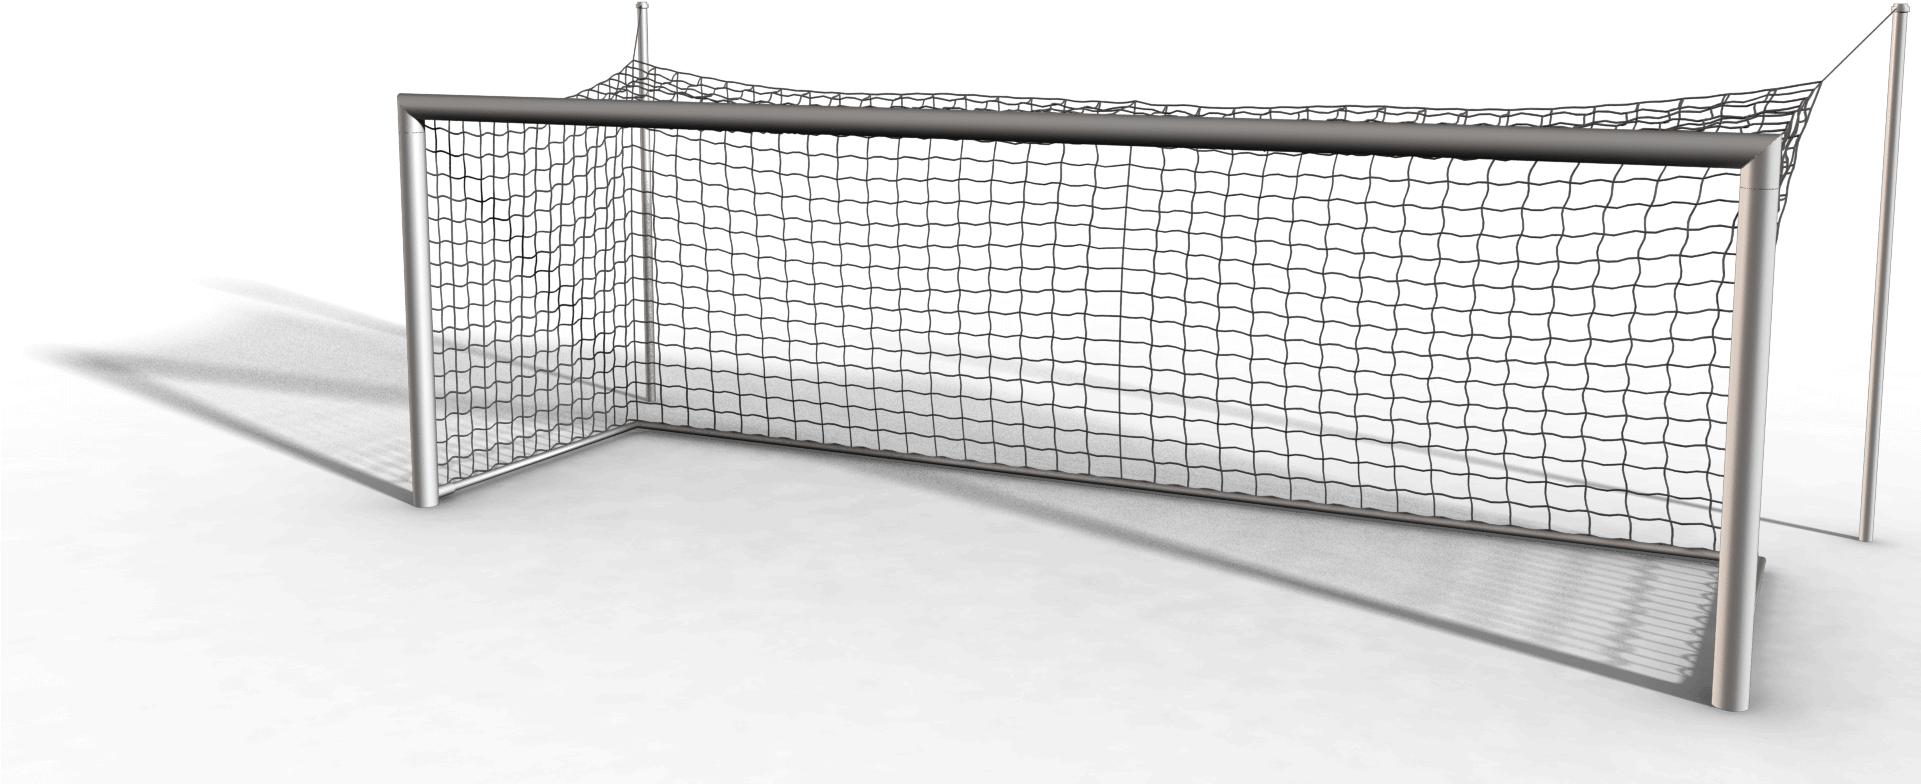 Football Goal Net PNG Background